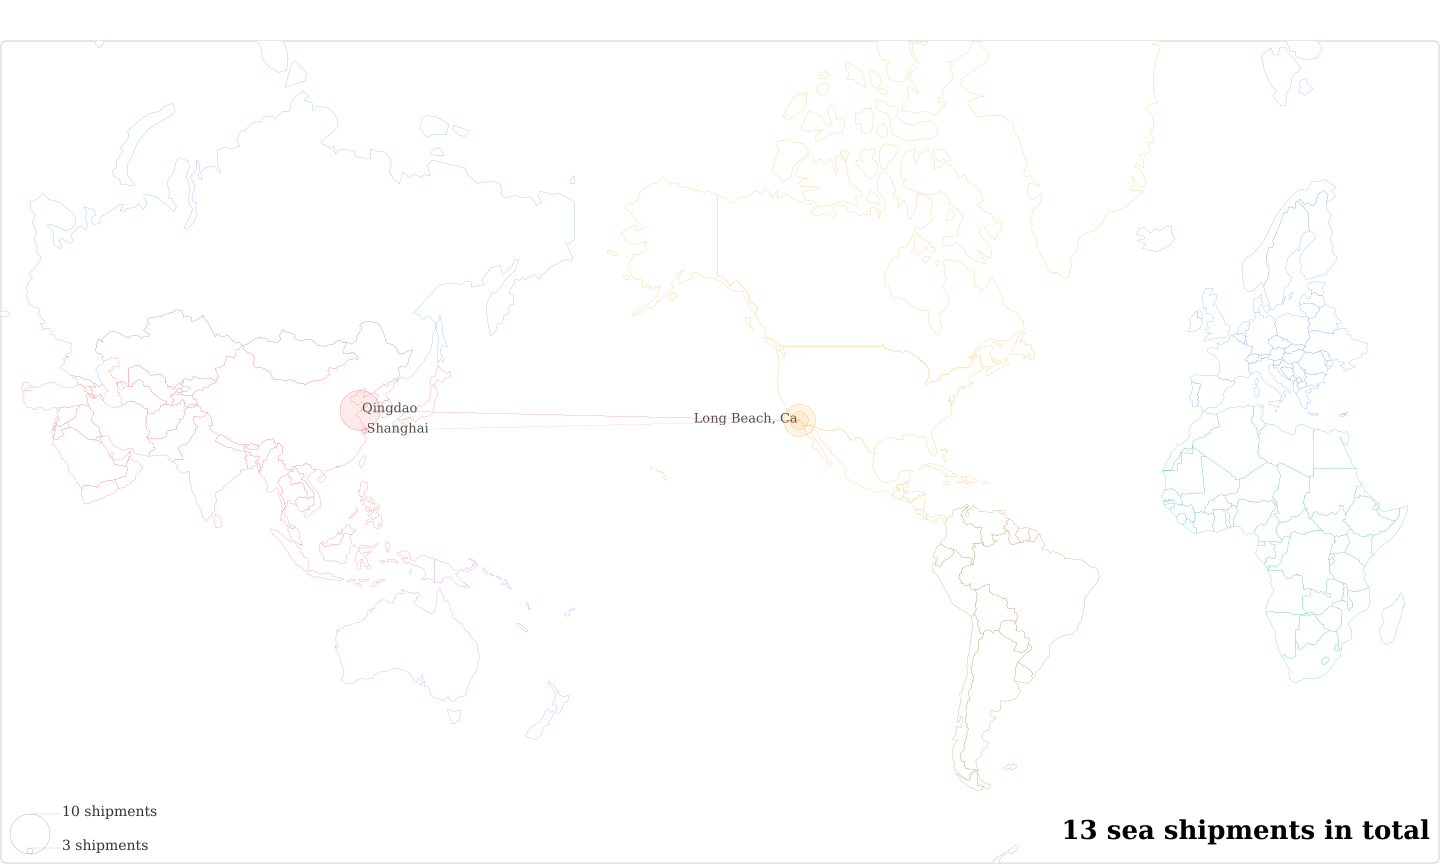 Xuchang Quduod Usa Ngmao's Imports Per Country Map